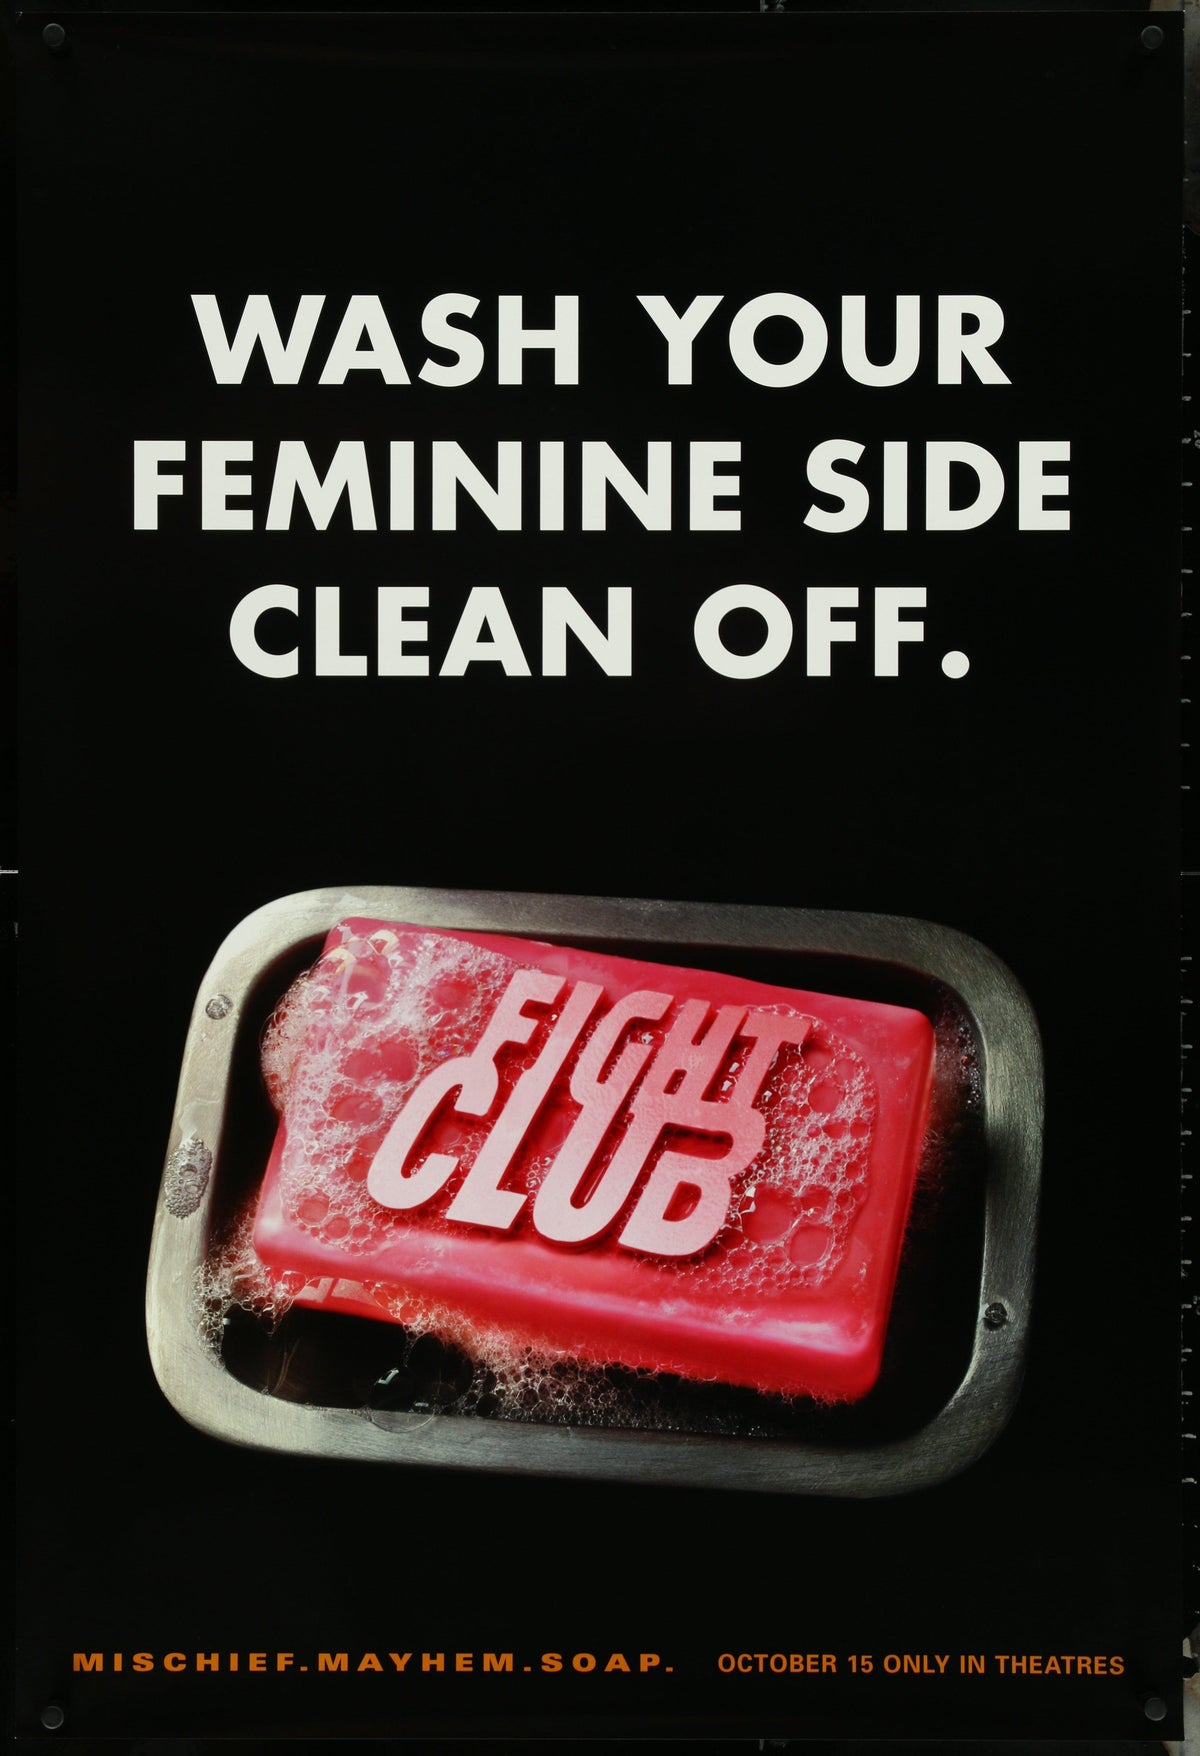 Fight Club 1 Sheet (27x41) Original Vintage Movie Poster